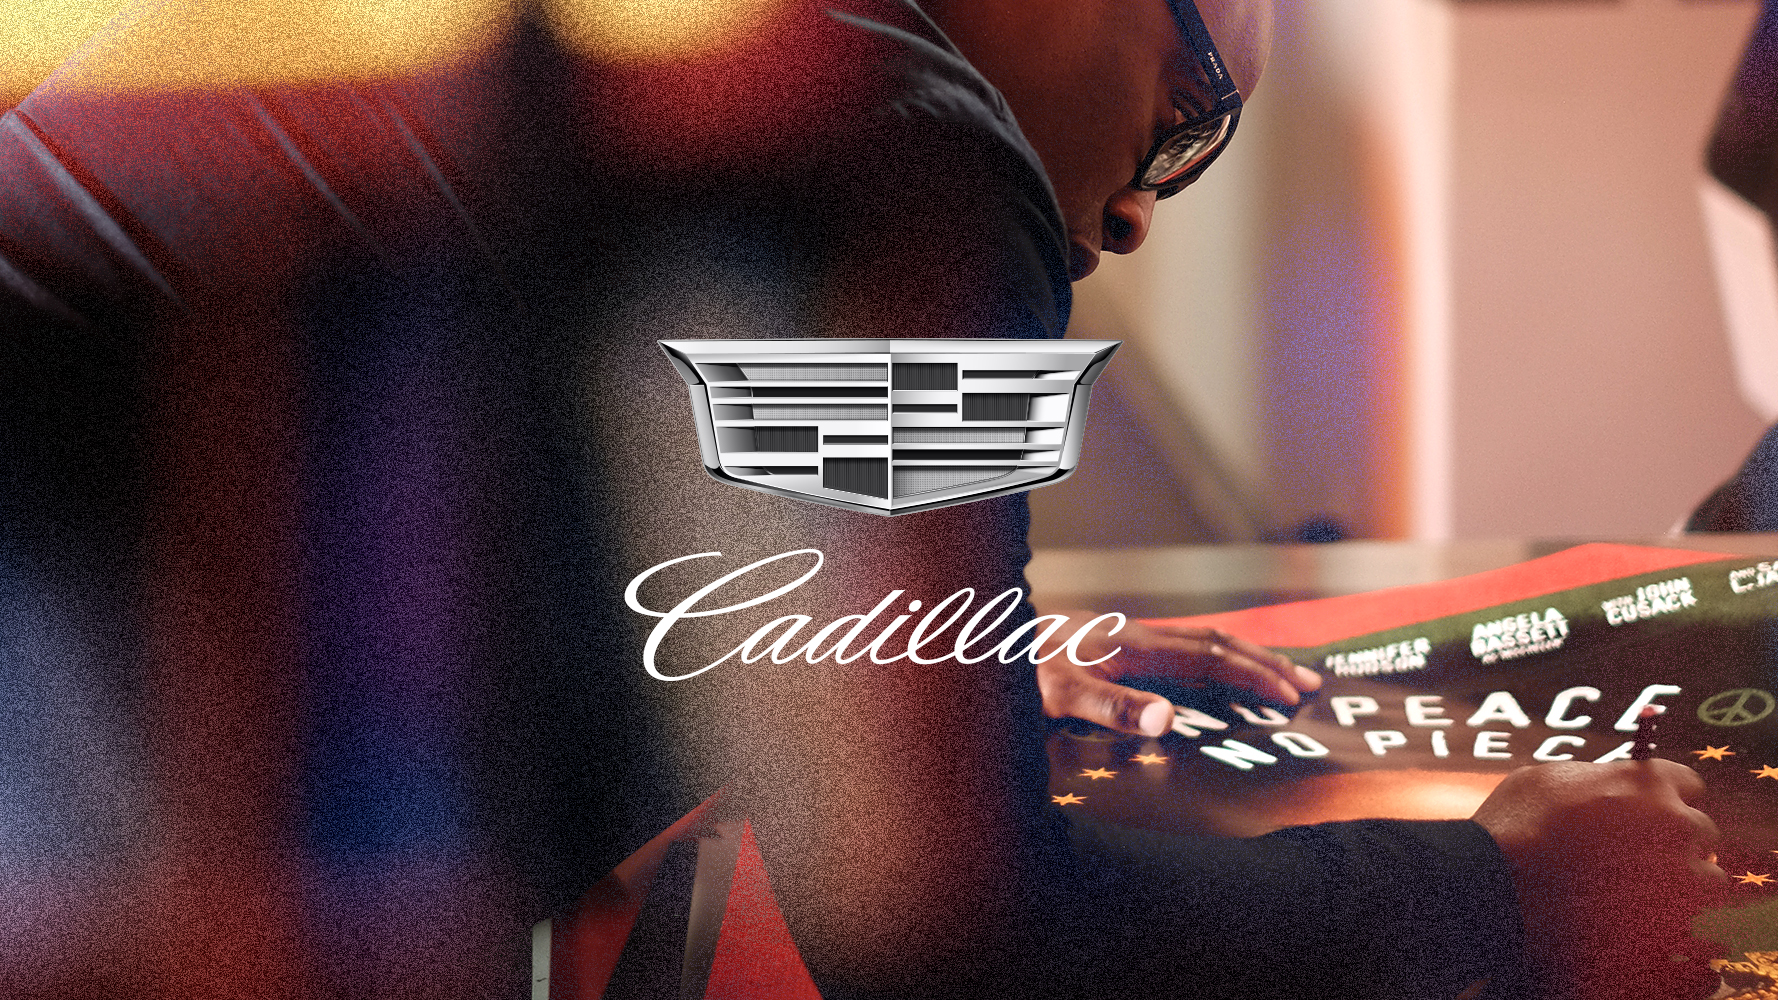 Cadillac x Kenny Gravillis